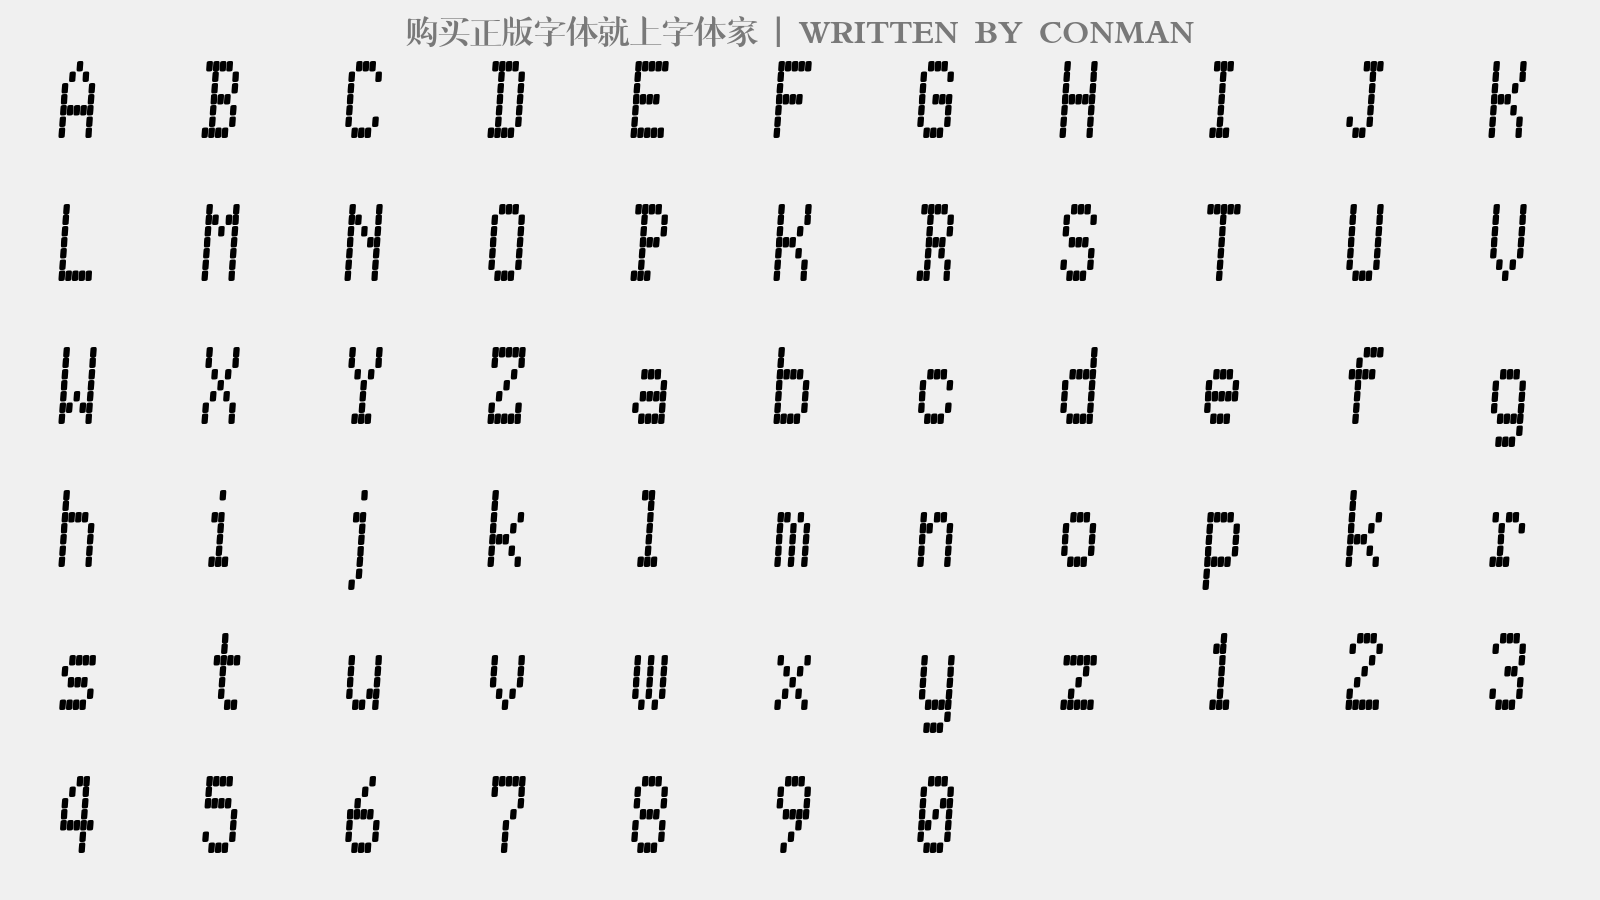 CONMAN - 大写字母/小写字母/数字